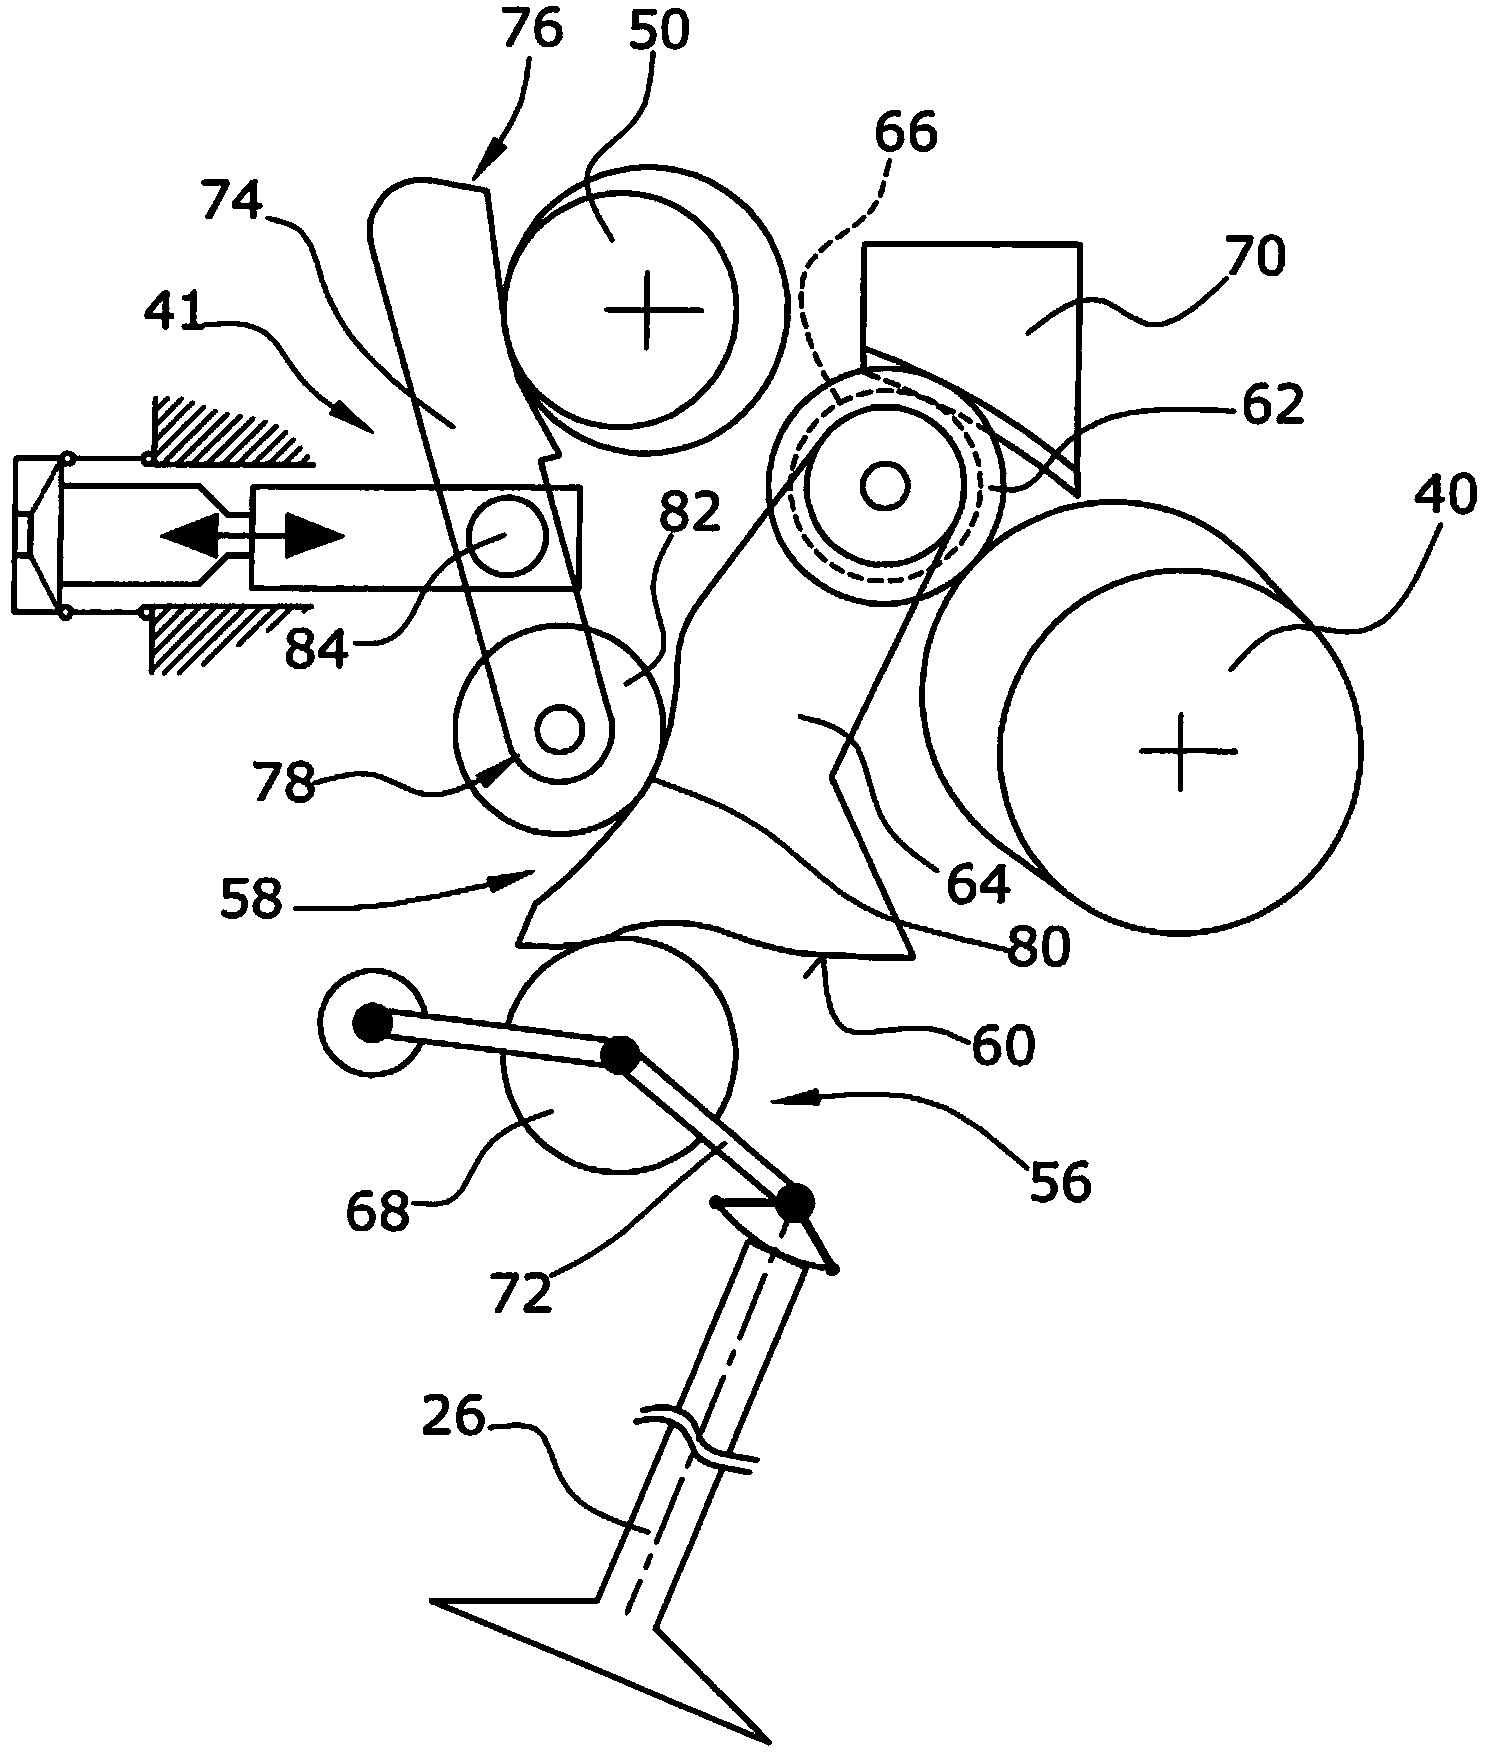 Mechanically controllable valve drive arrangement